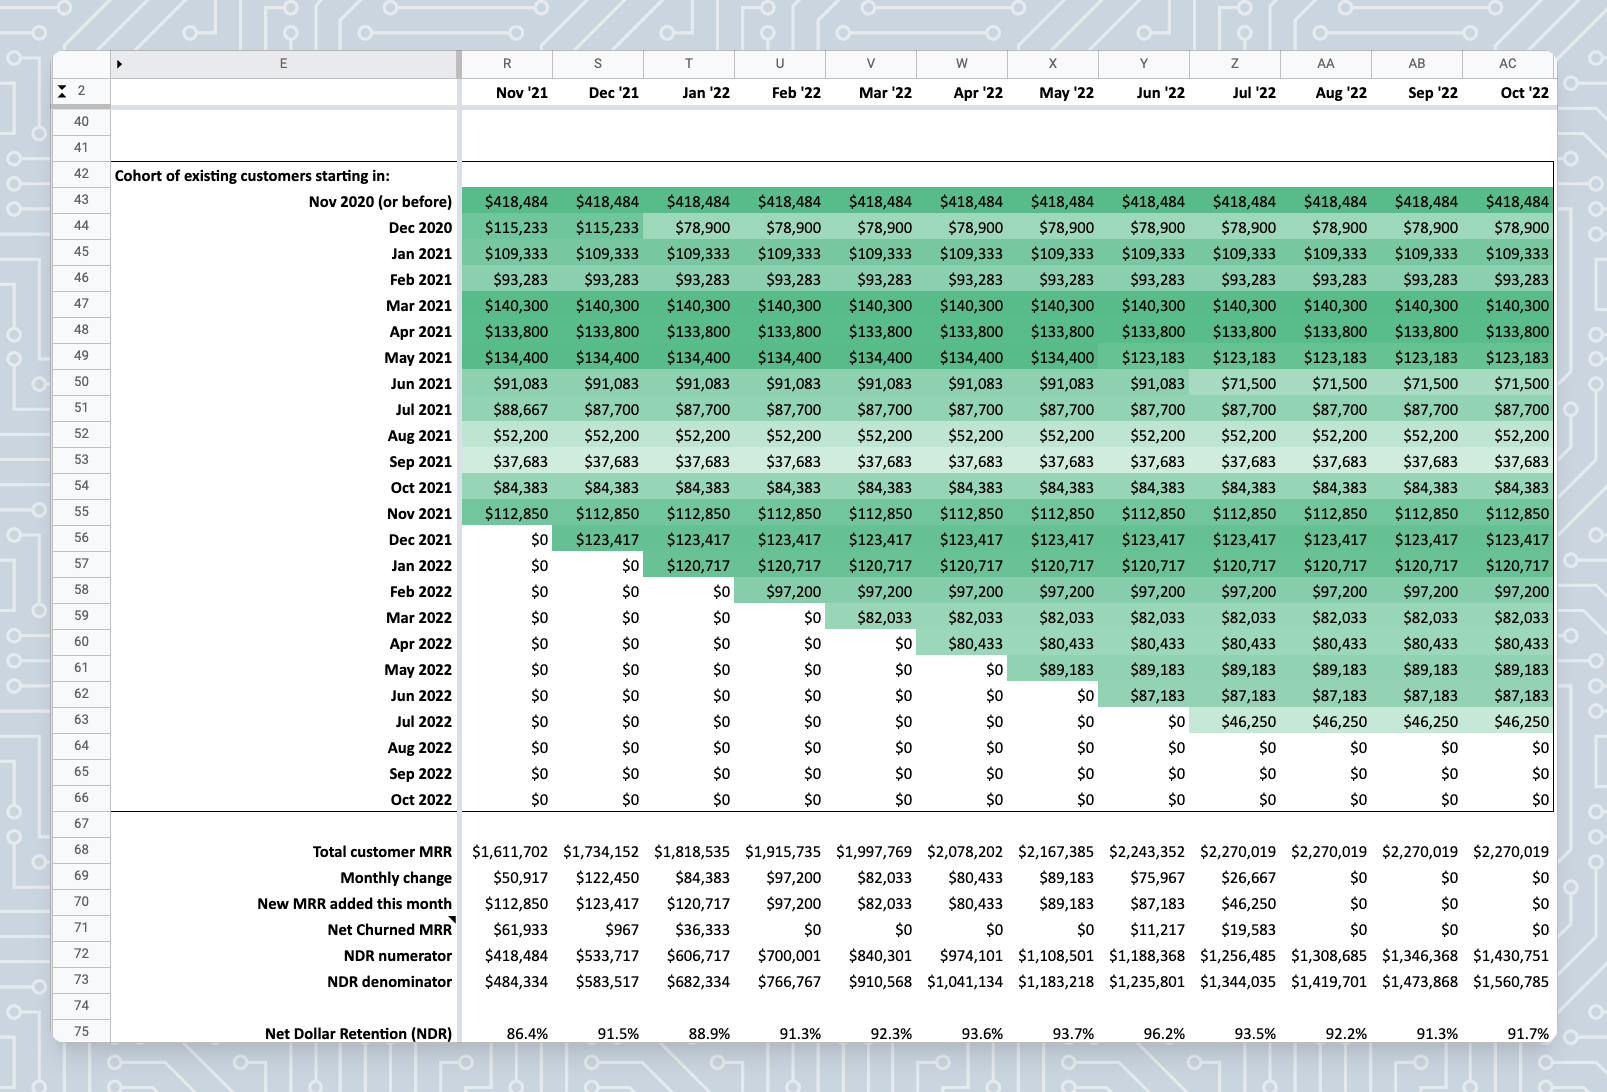 net dollar retention rate cohort analysis table